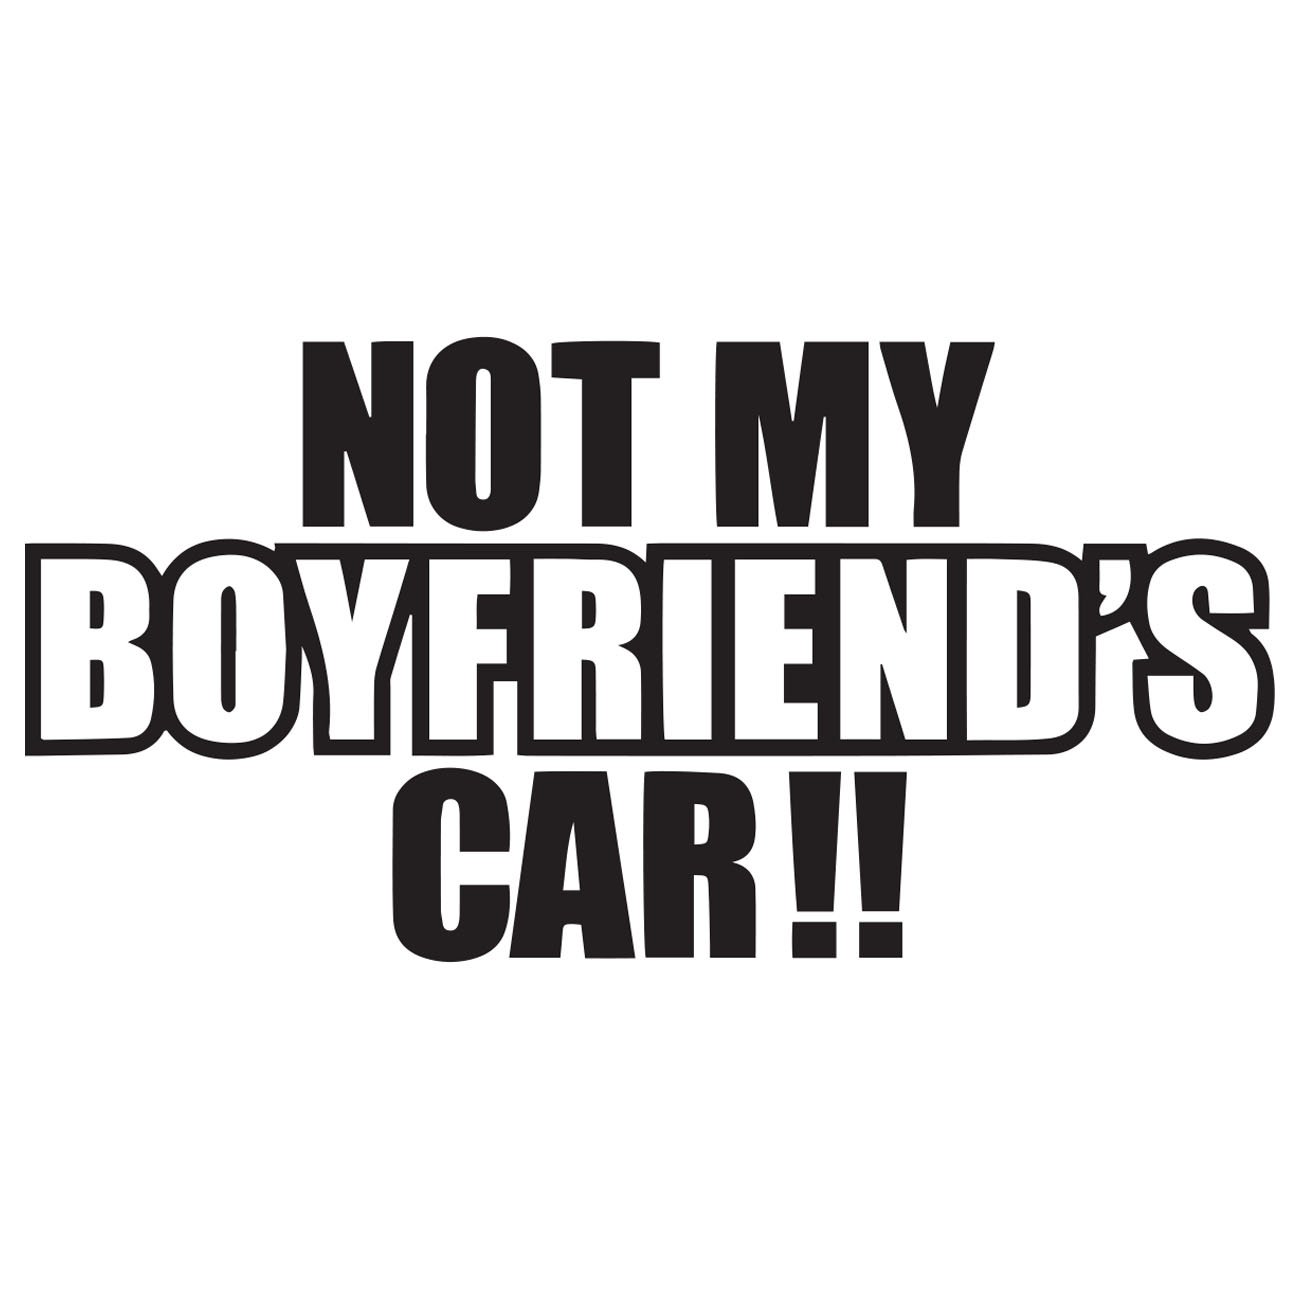 Not my boyfriends car